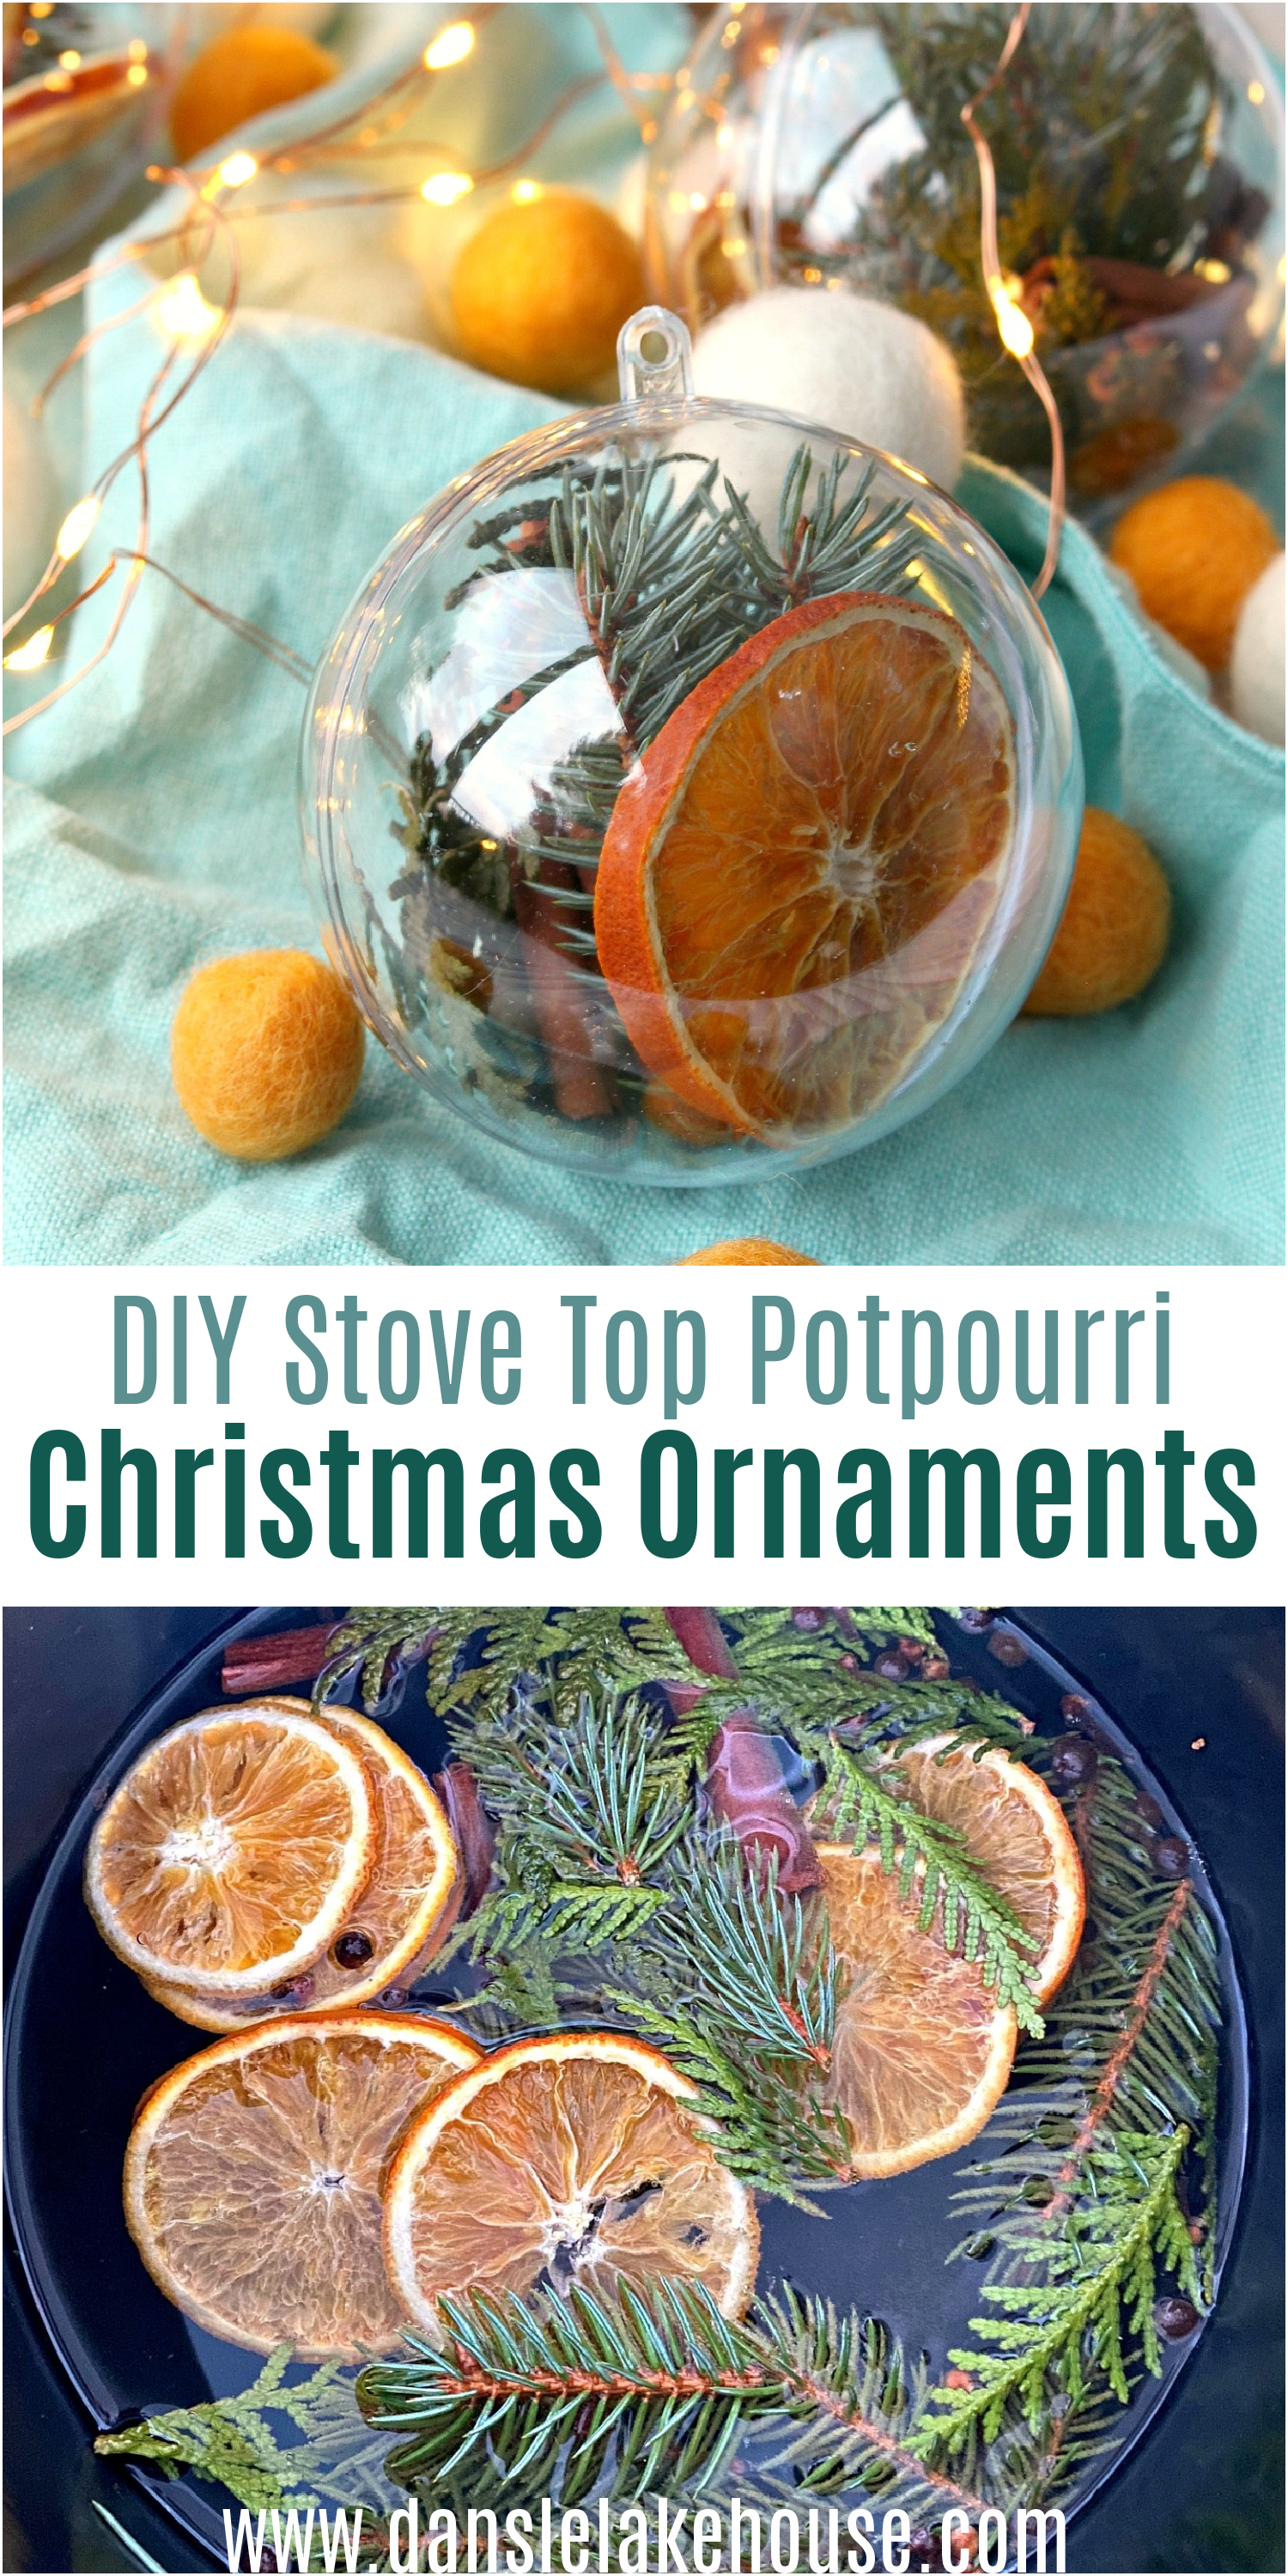 DIY Stove Top Potpourri Christmas Ornaments